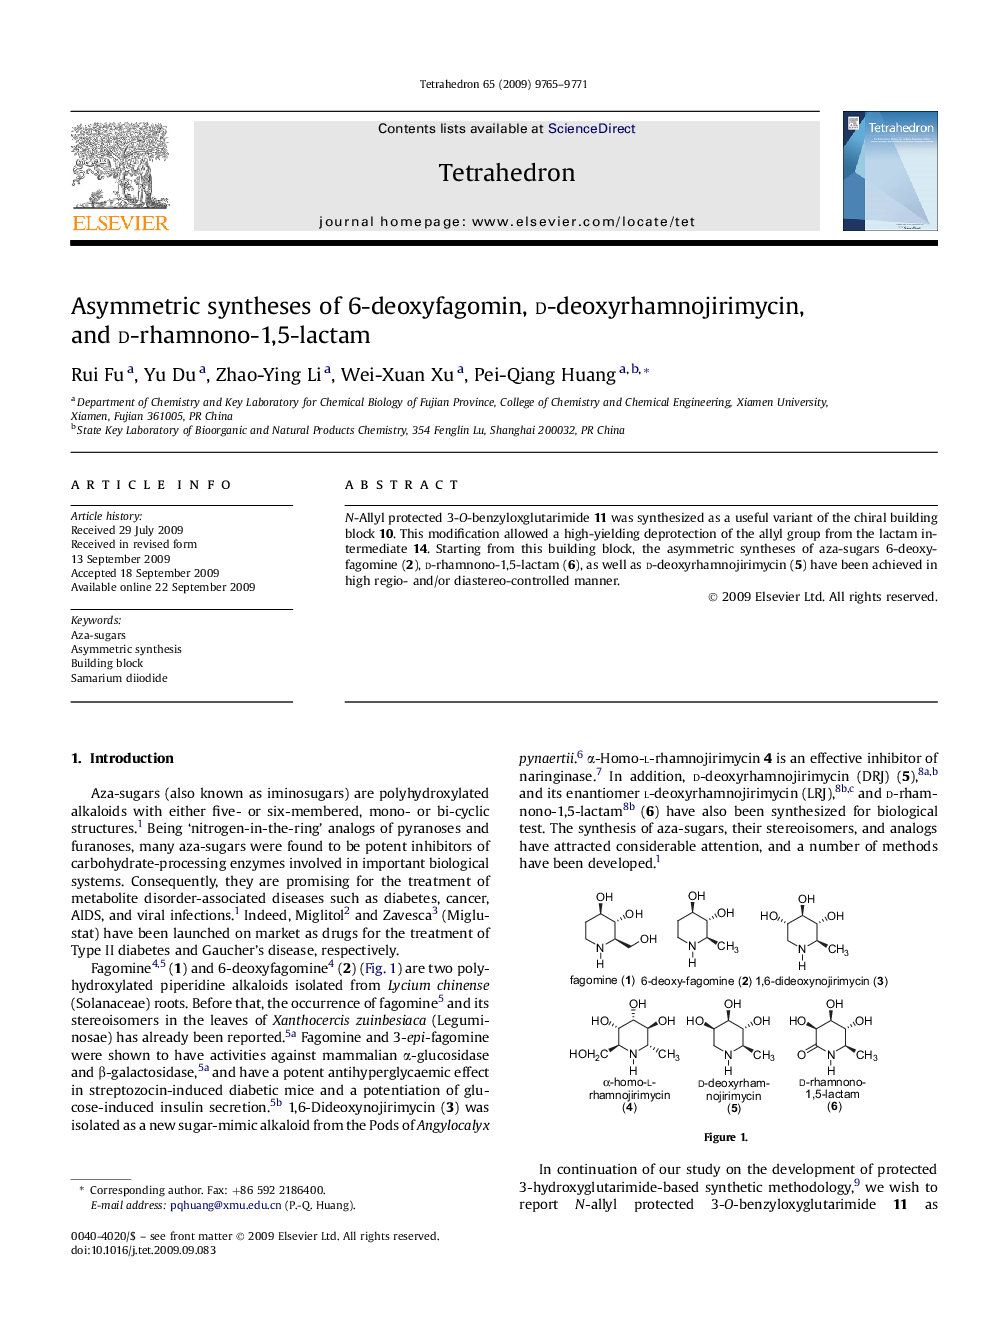 Asymmetric syntheses of 6-deoxyfagomin, d-deoxyrhamnojirimycin, and d-rhamnono-1,5-lactam